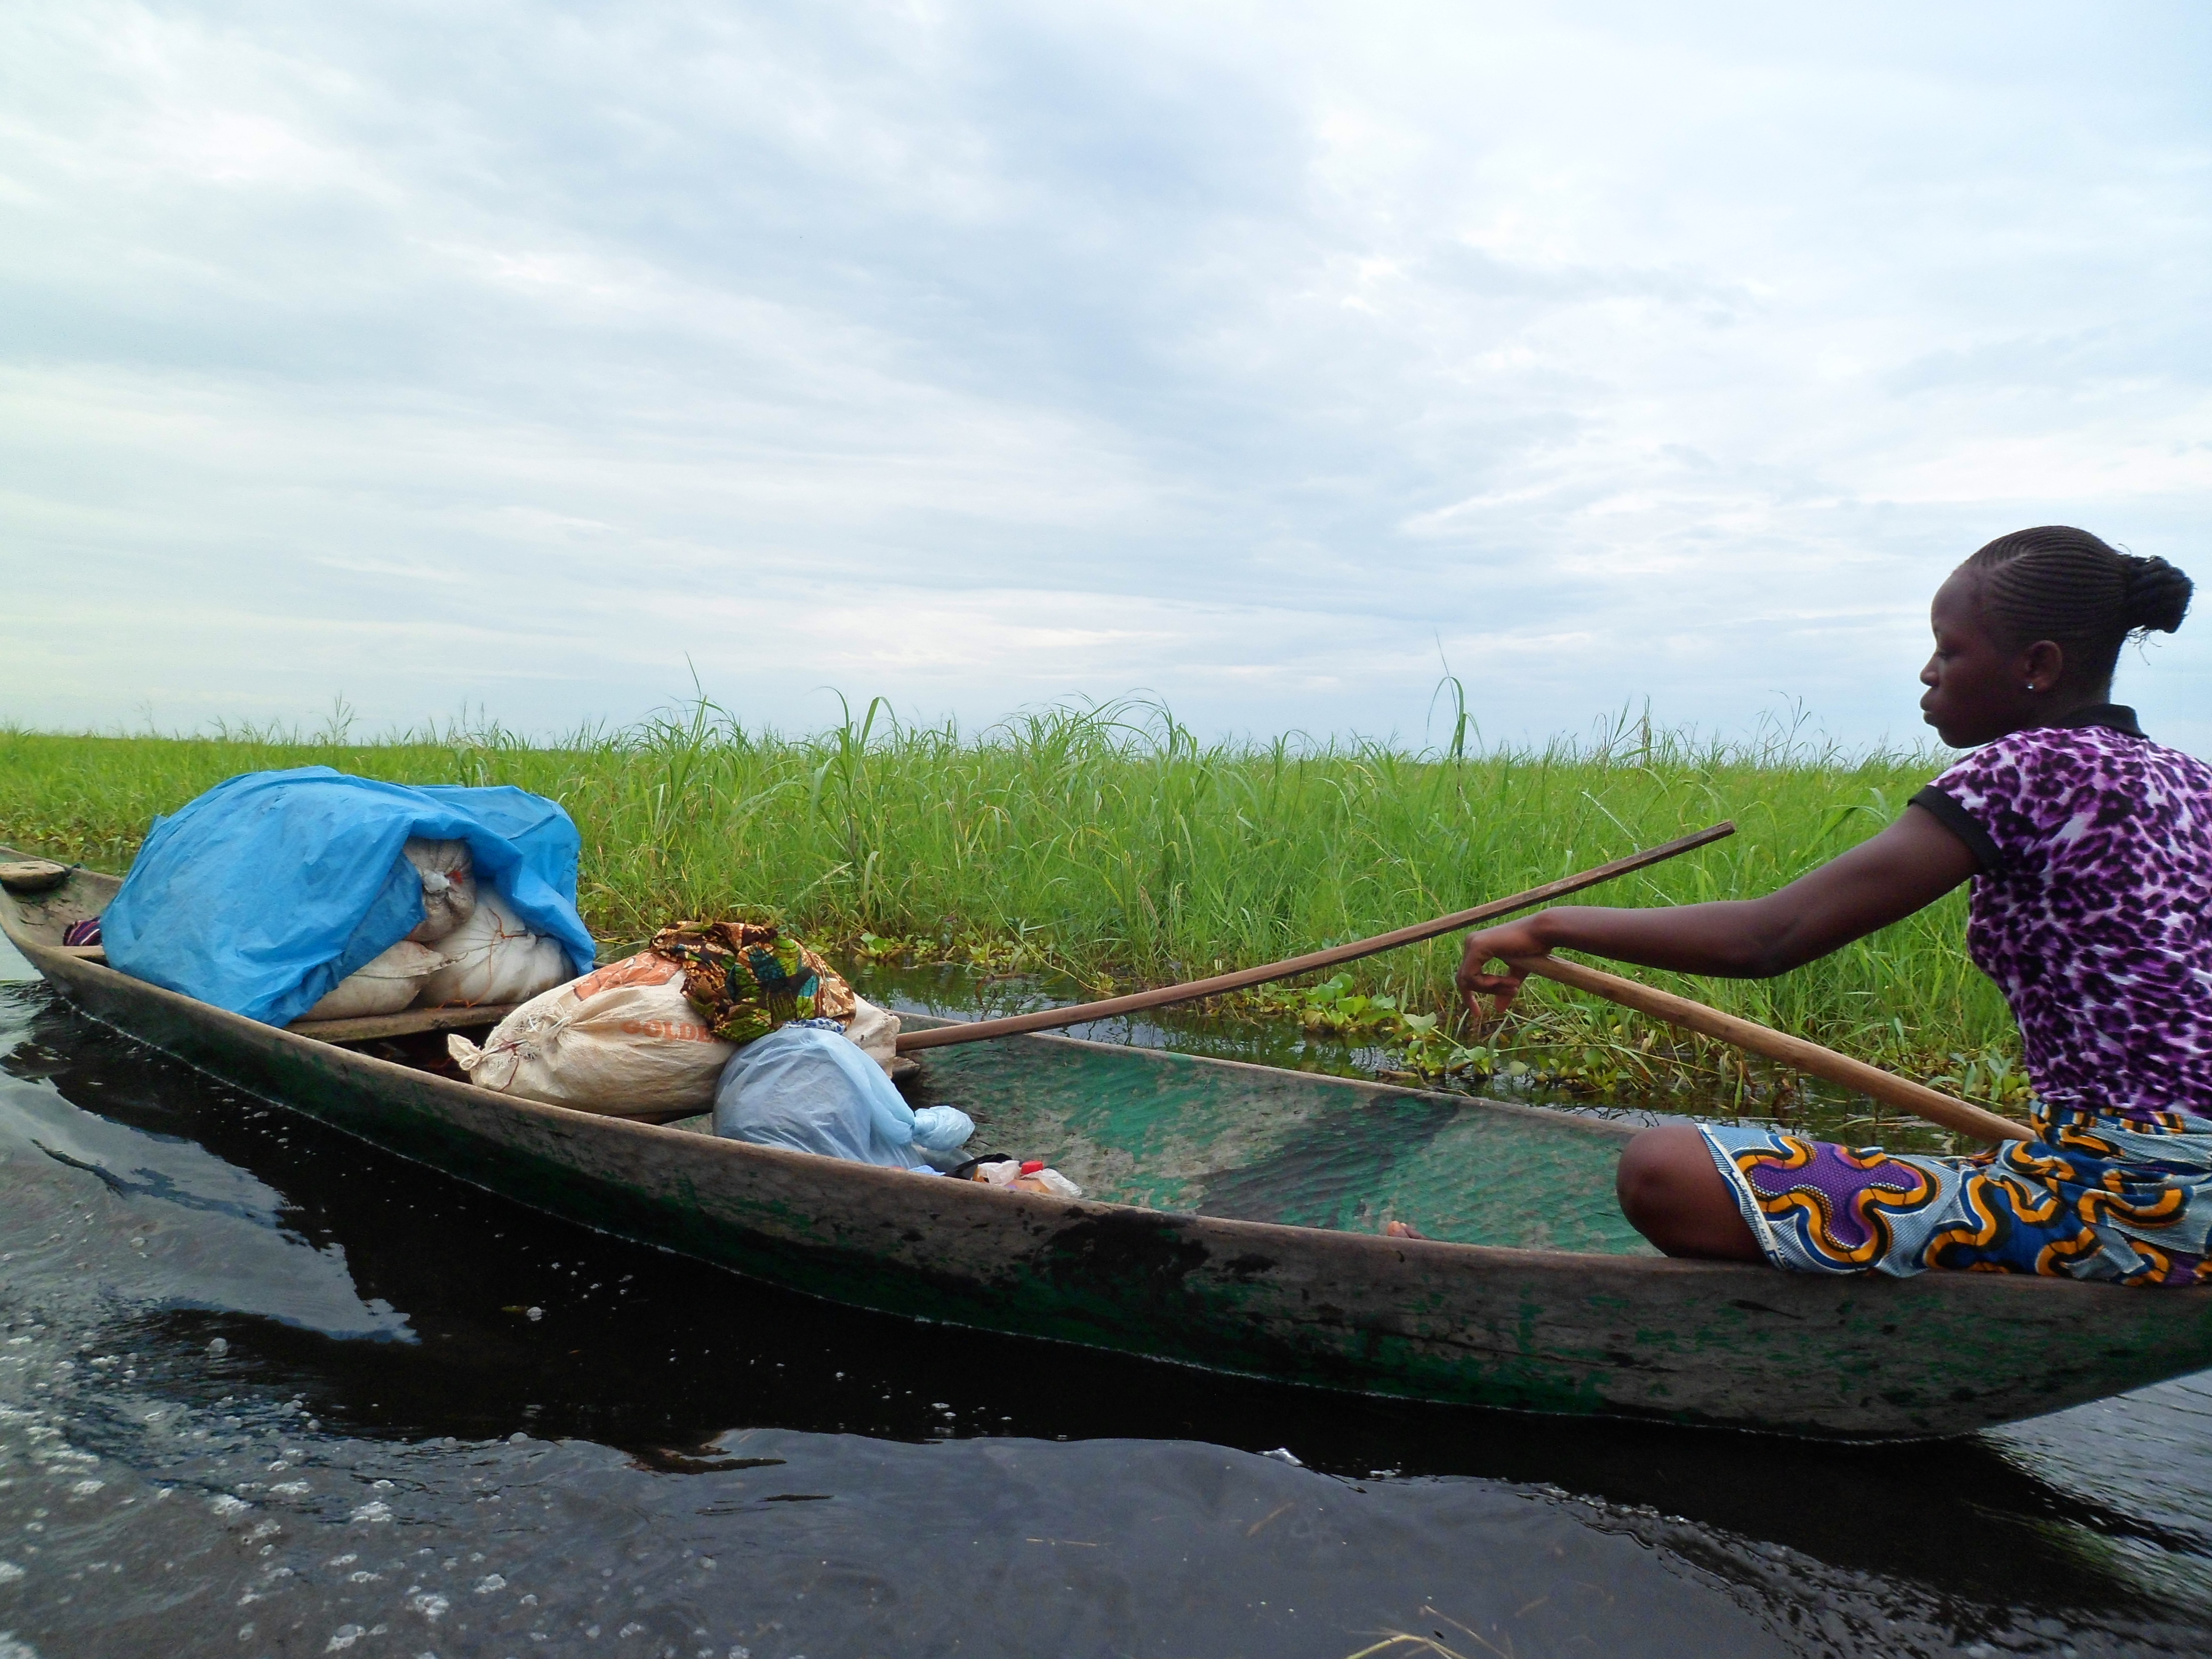 A woman sits in a boat, working in a fishery in Benin.